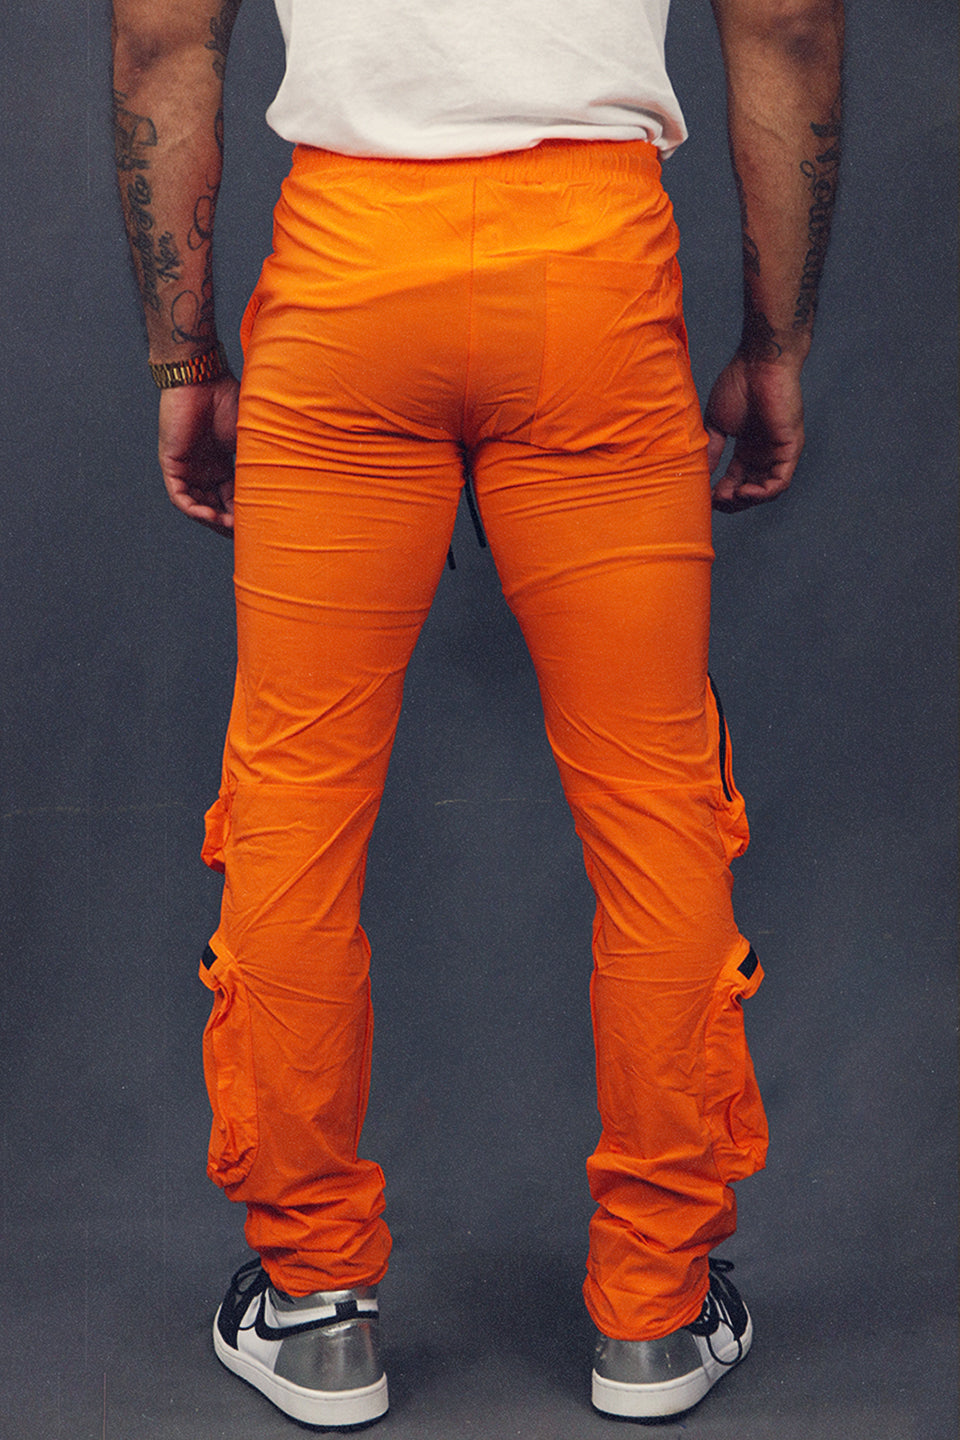 Men's Tactical Nylon Track Pants Street Sweatpants Utility Joggers with Zipper Pockets | Orange back view